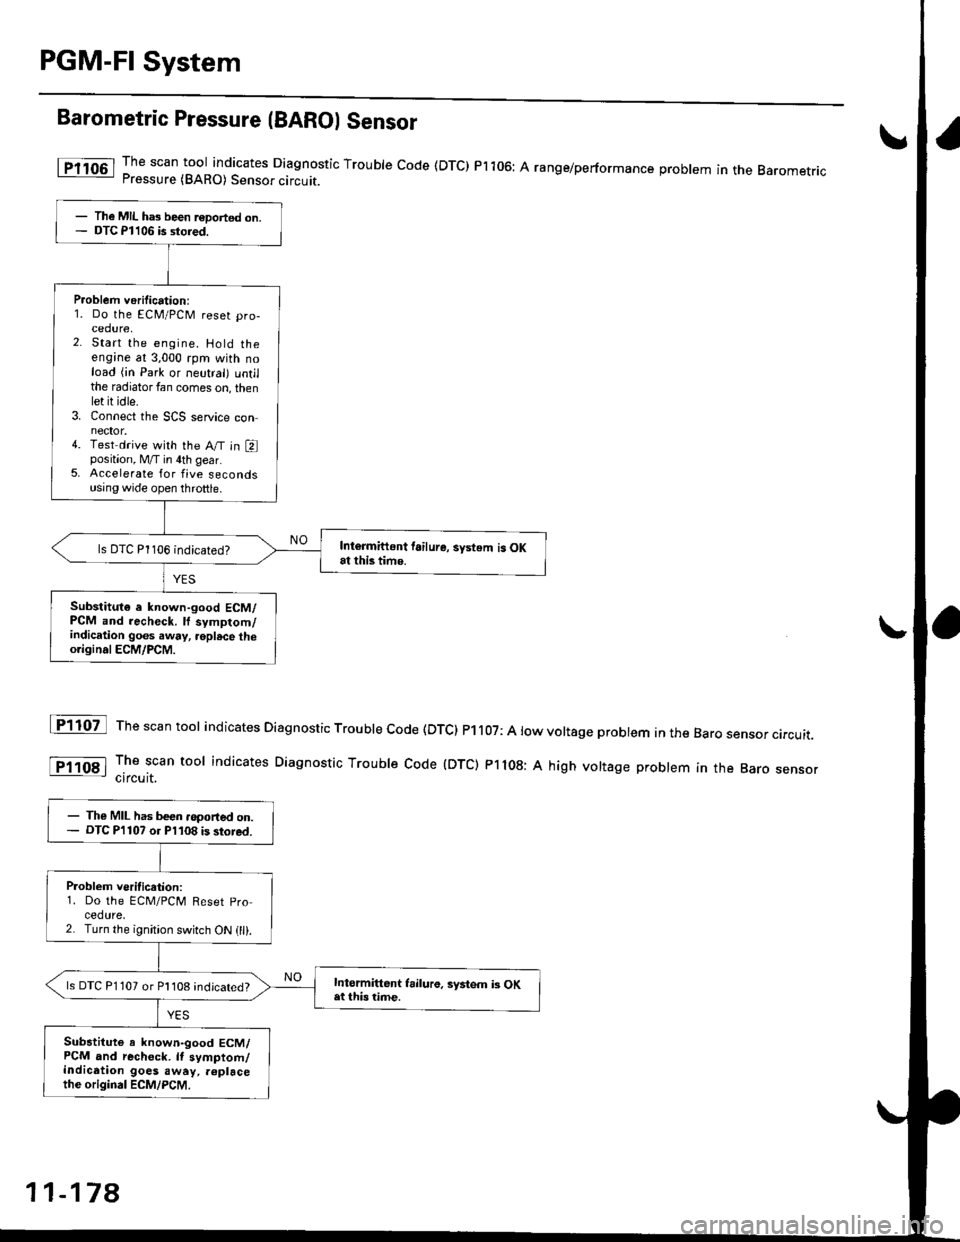 HONDA CIVIC 1998 6.G Workshop Manual PGM-FI System
Barometric Pressure (BAROI Sensor
The scan tool indicates Diagnostic Trouble code (DTC) Pi106: A range/performance problem in the BaromerrrcPressure (BARO) Sensor circuit.
The scan tool 